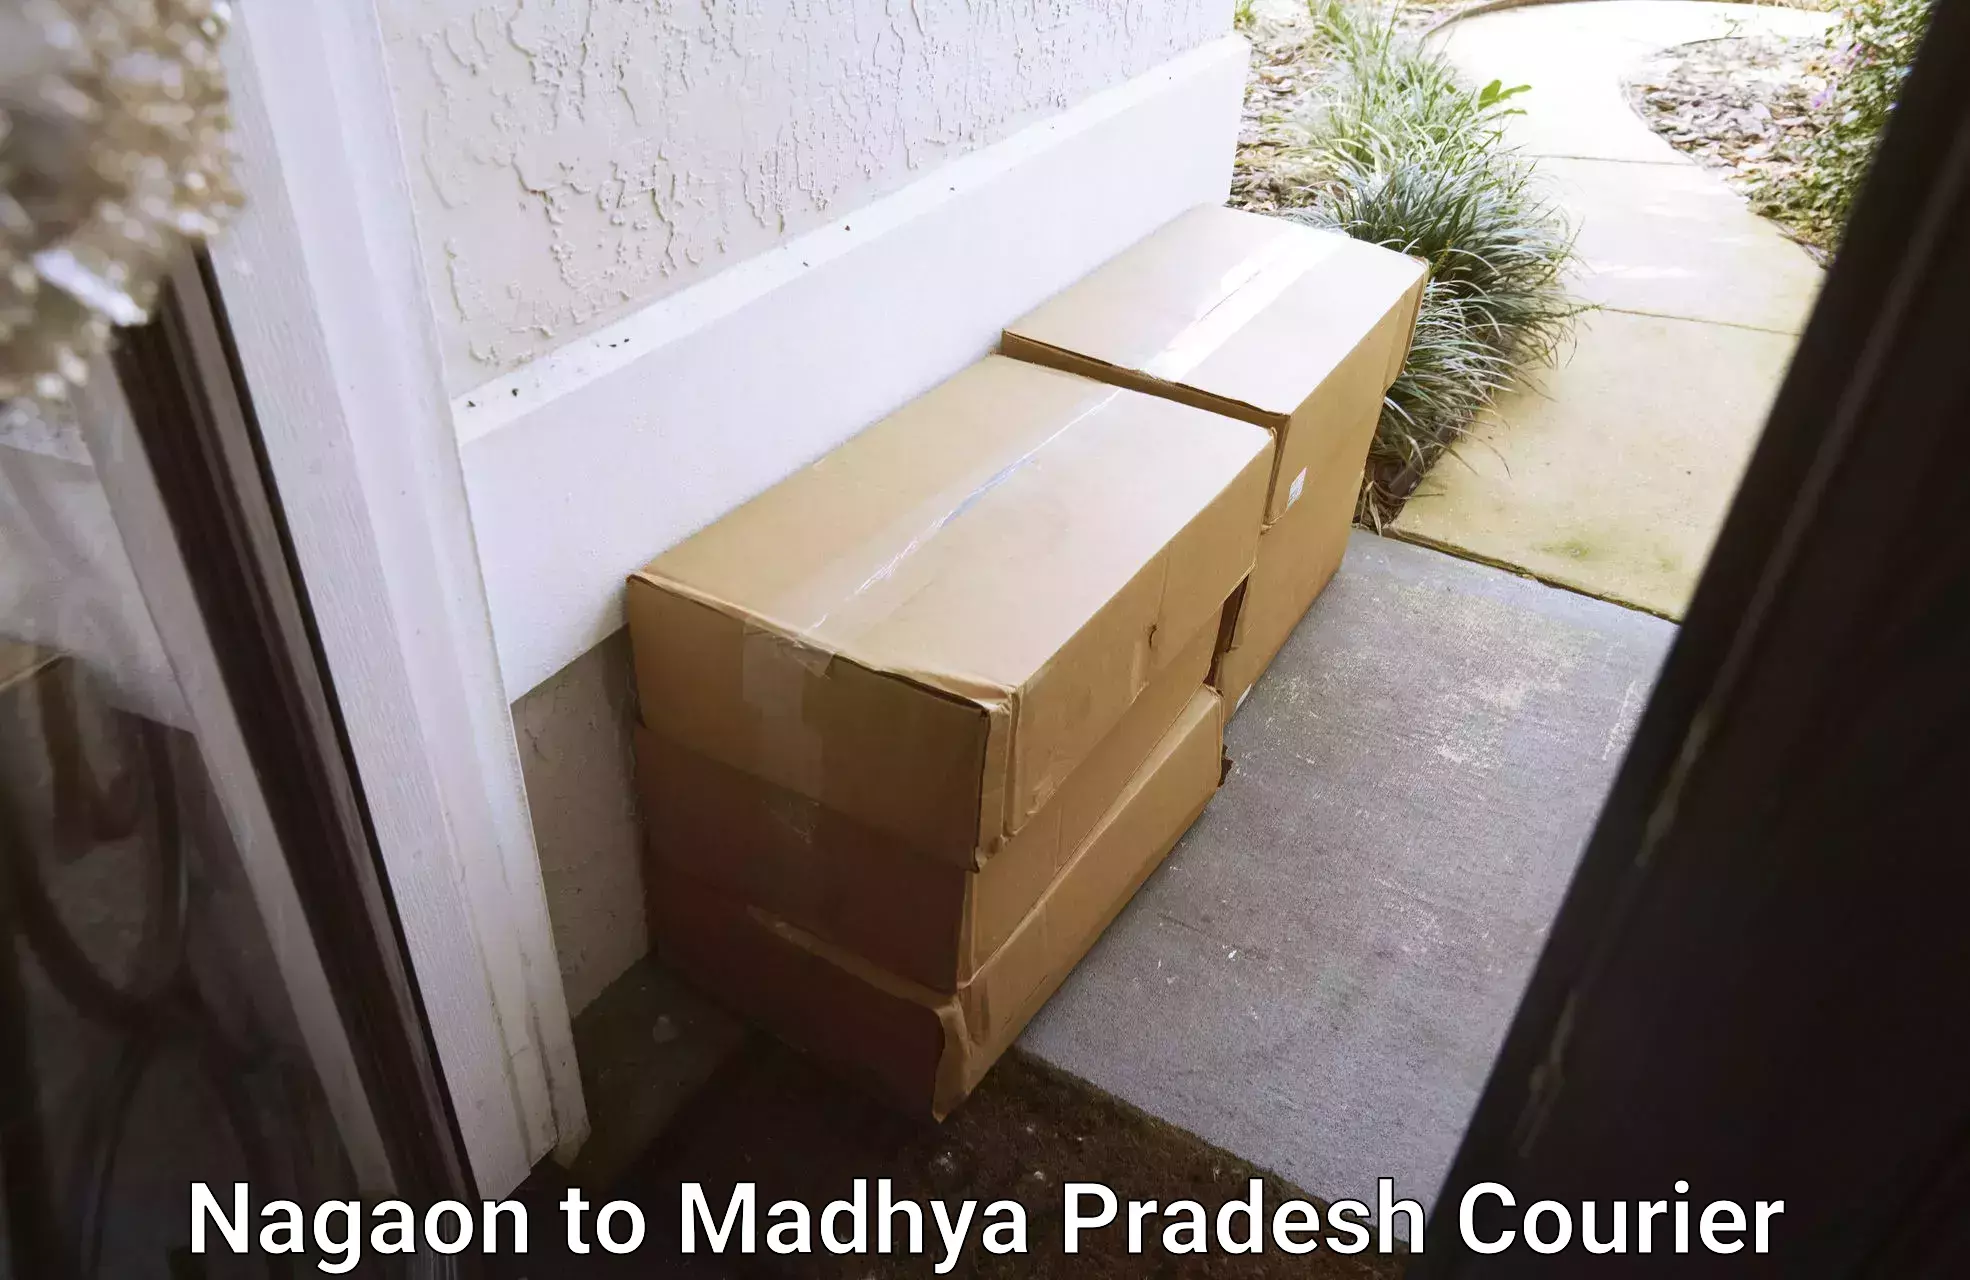 High-priority parcel service Nagaon to Madhya Pradesh